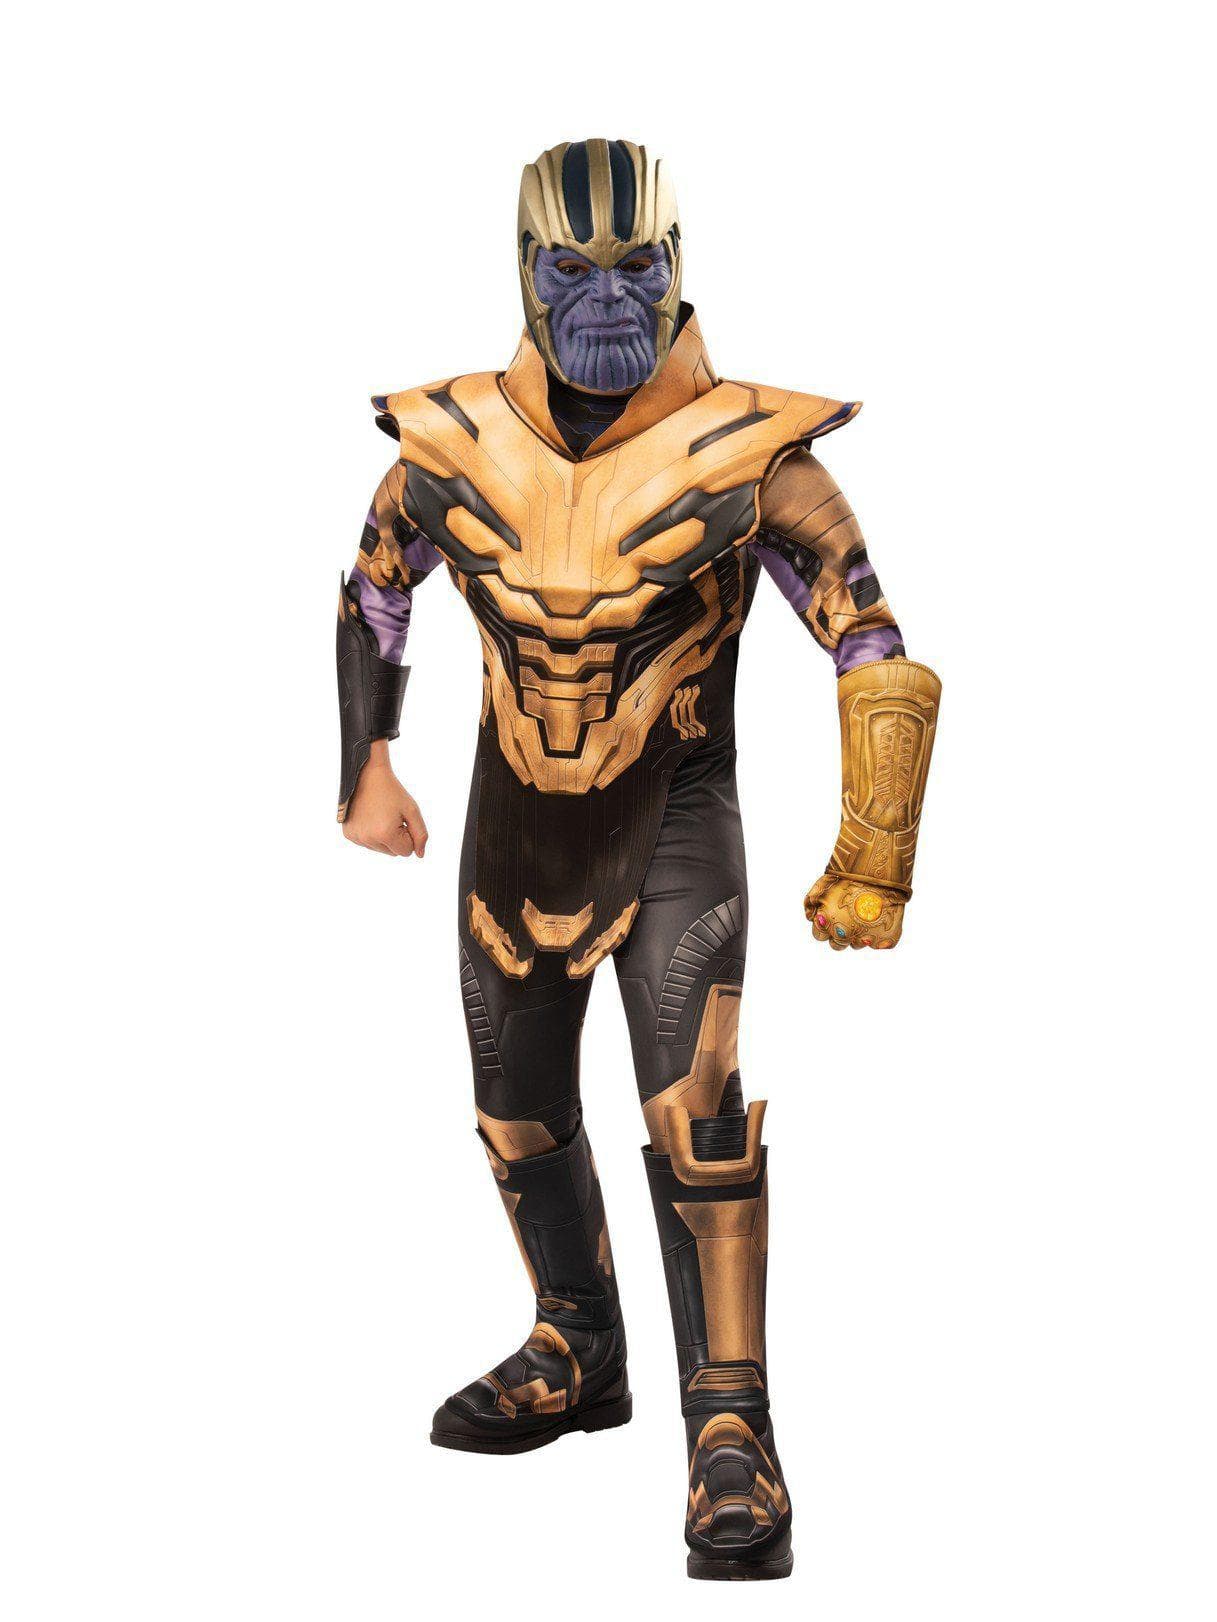 Kids Avengers Thanos Deluxe Costume - costumes.com